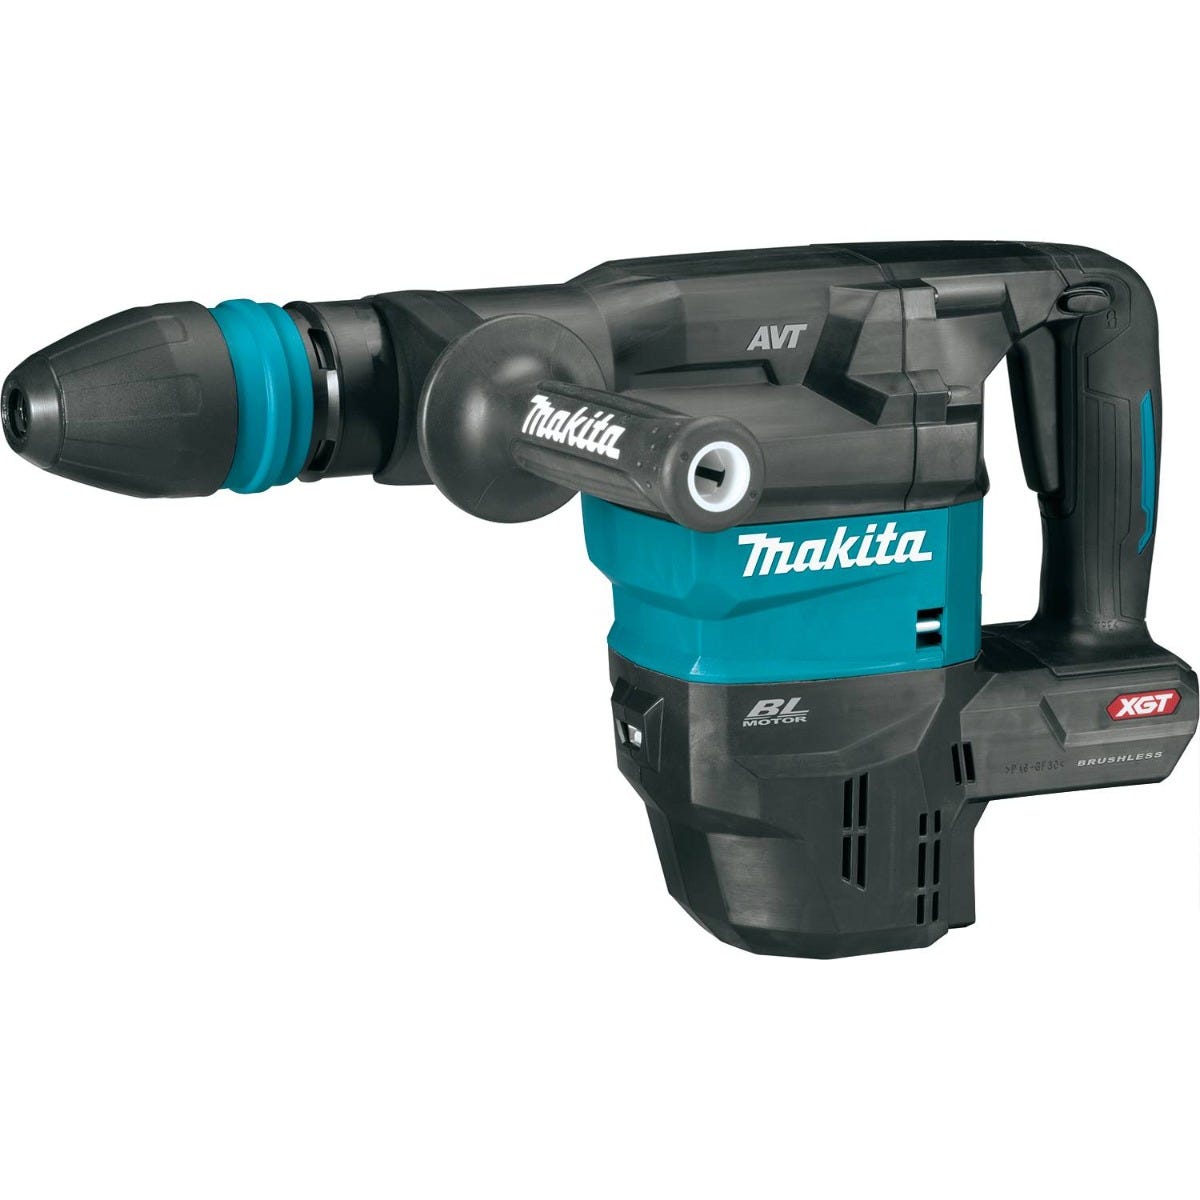 Makita 40V max XGT® Brushless Cordless 15 lb. AVT® Demolition Hammer